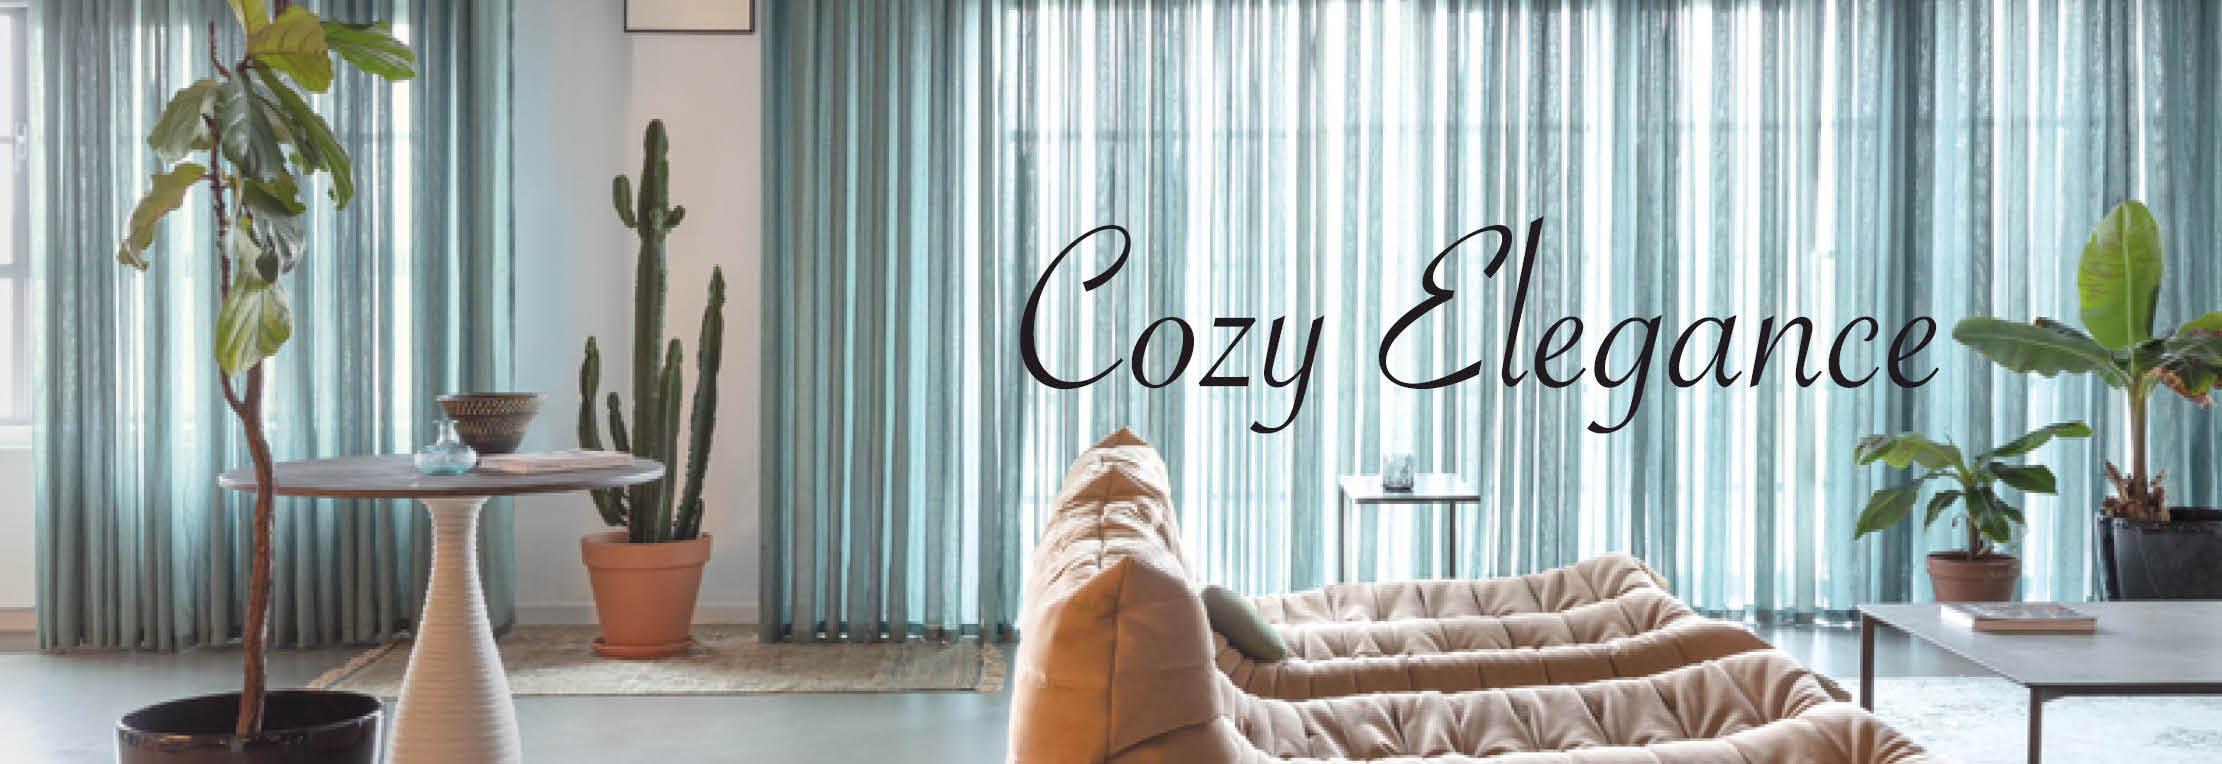 Cozy Elegance Fuggerhaus high qualitiy curtains